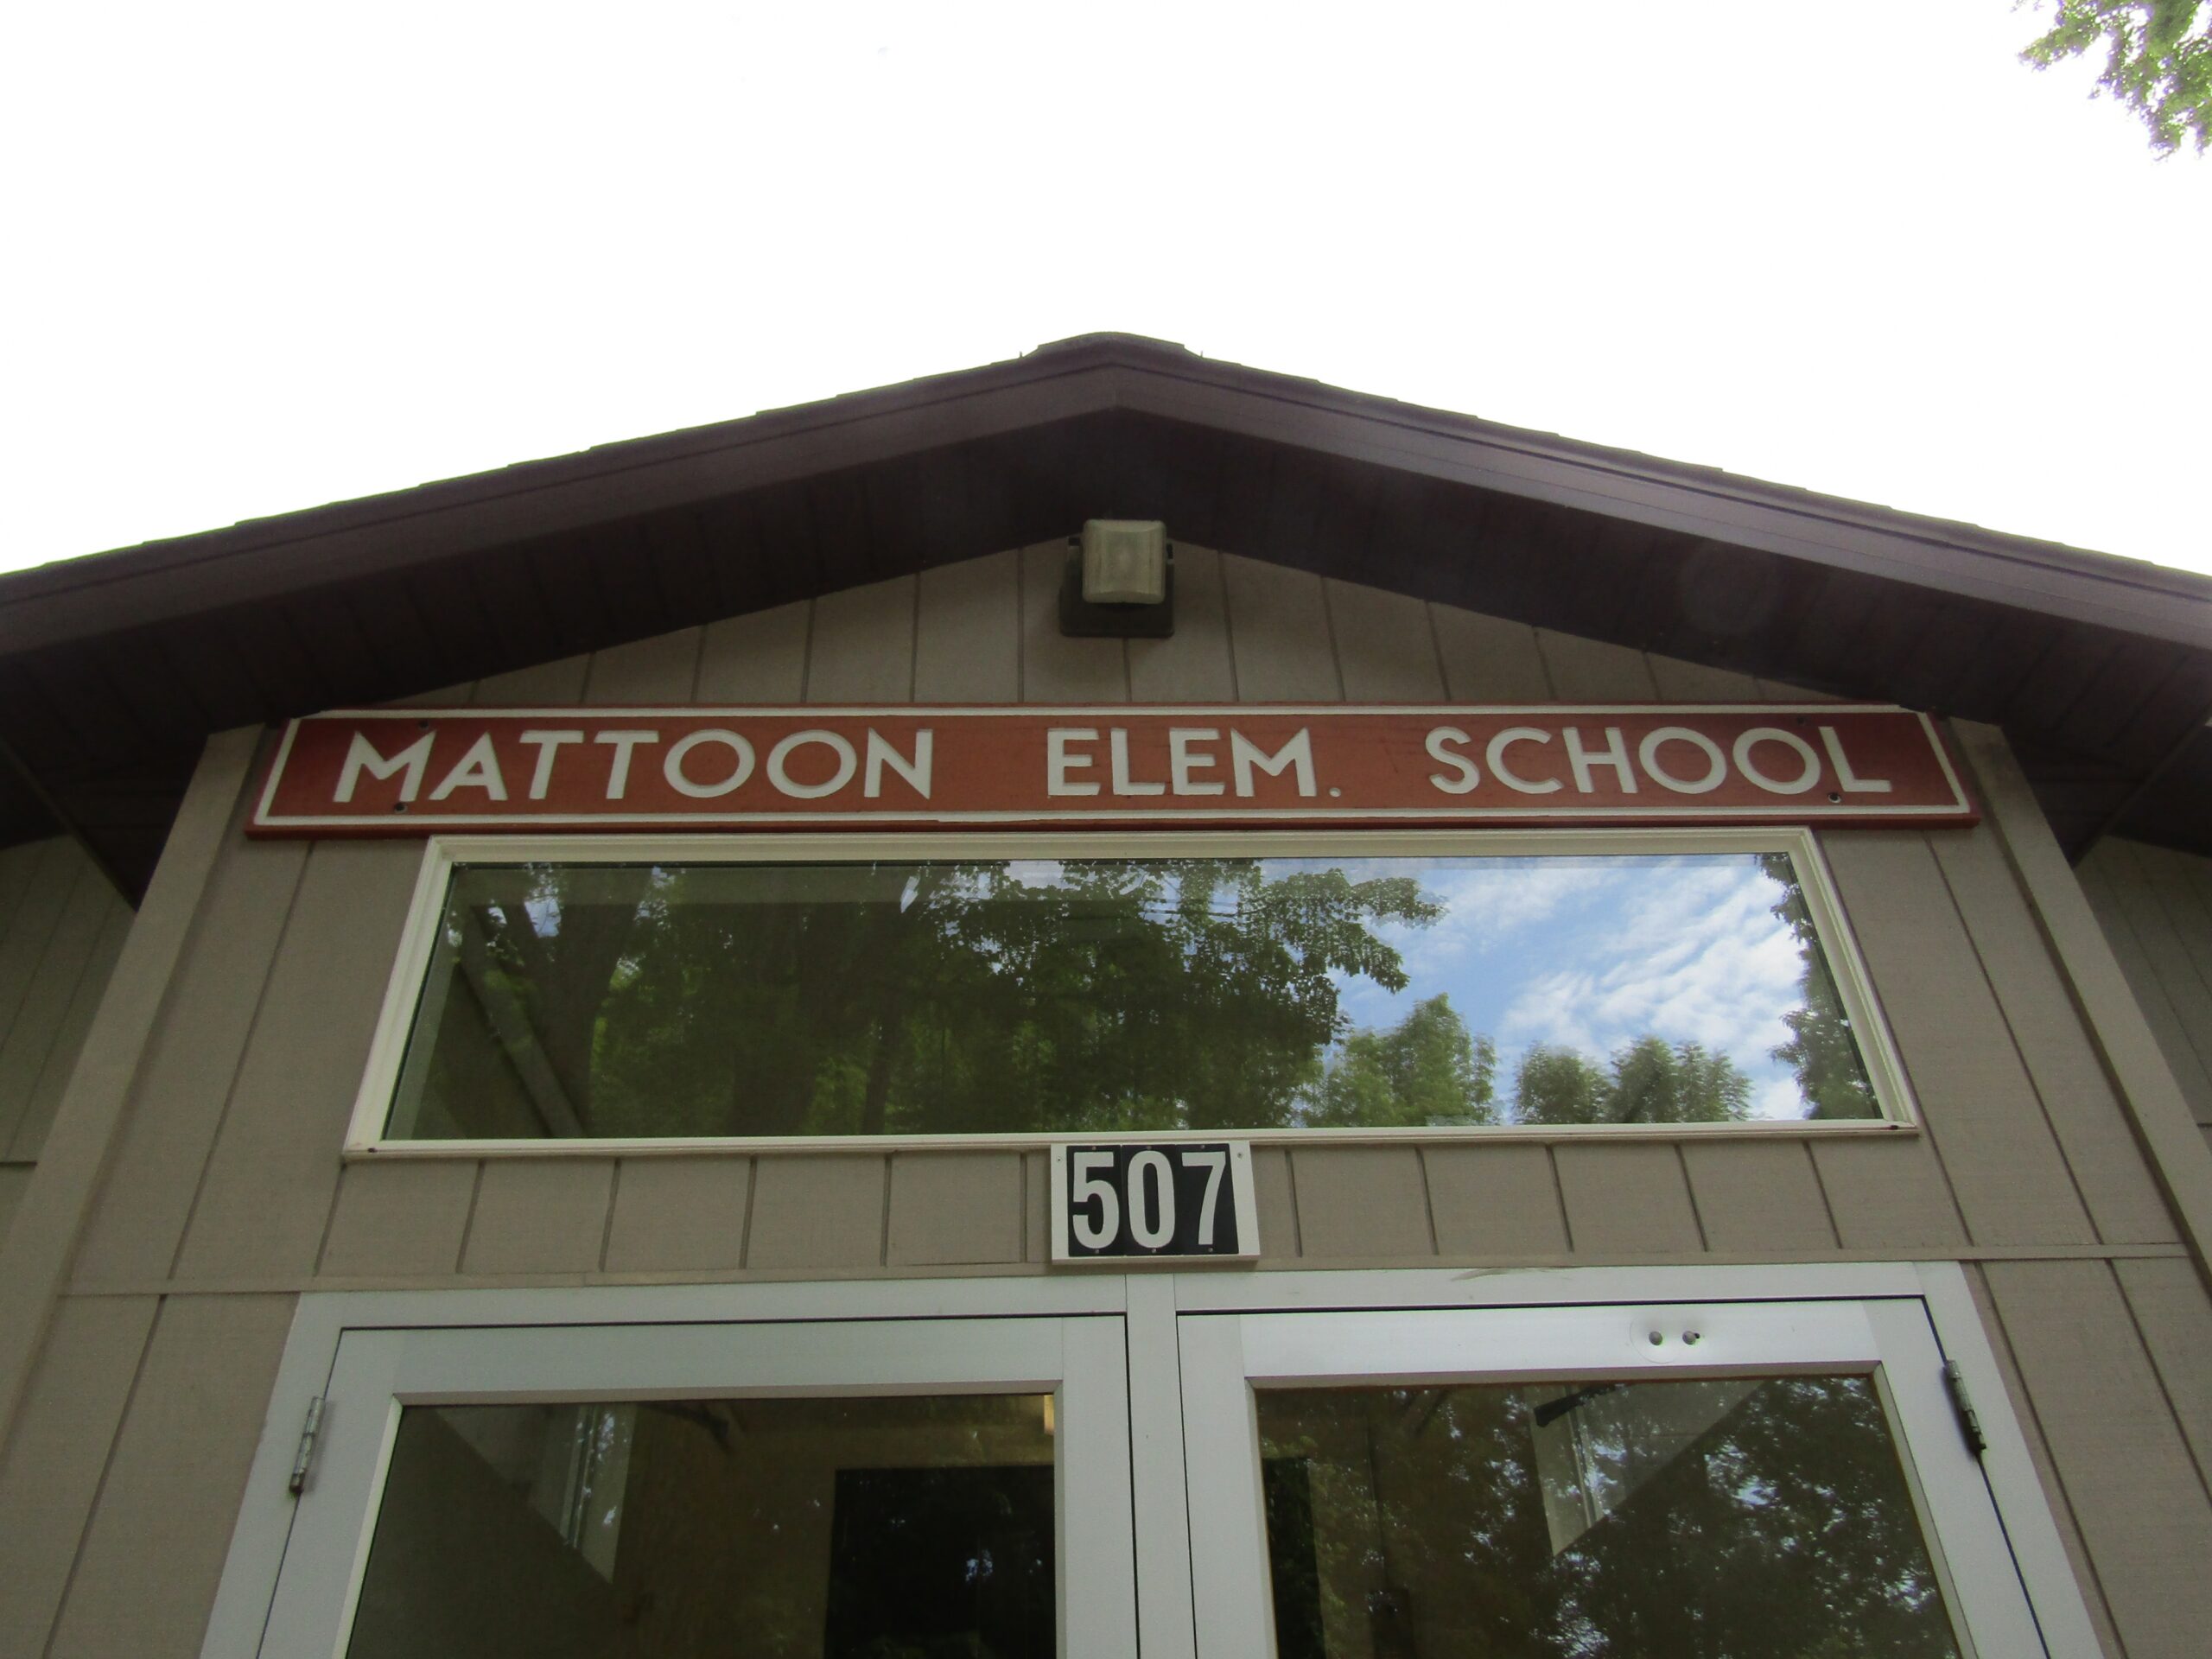 Mattoon Elementary School